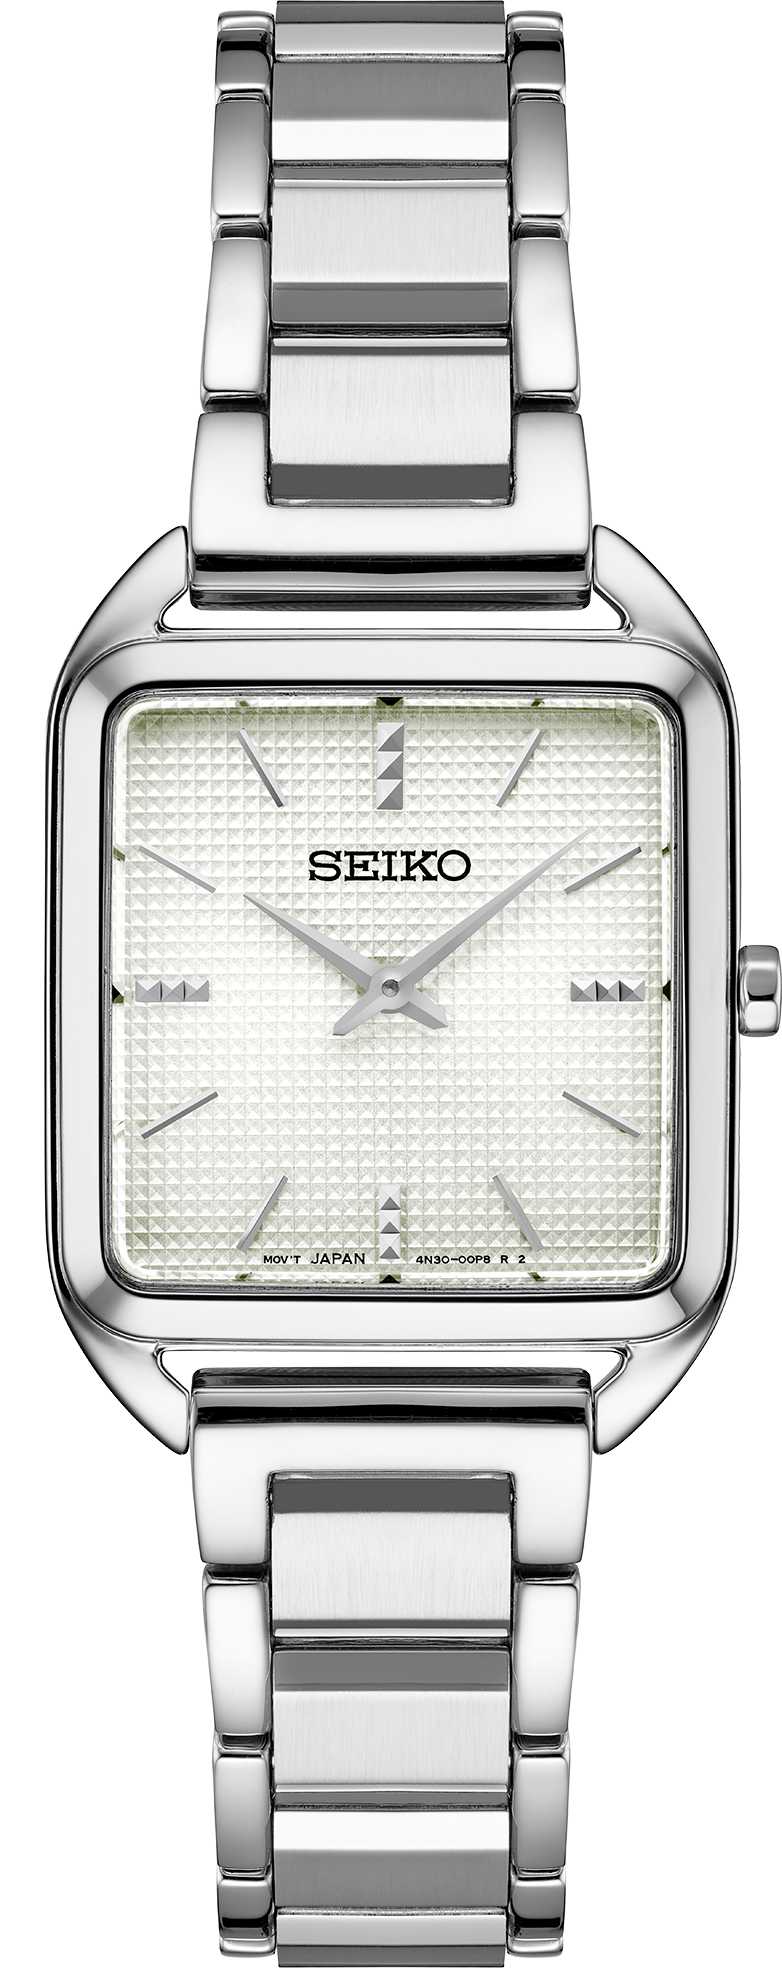 Seiko SWR073 Watch Technicians Store